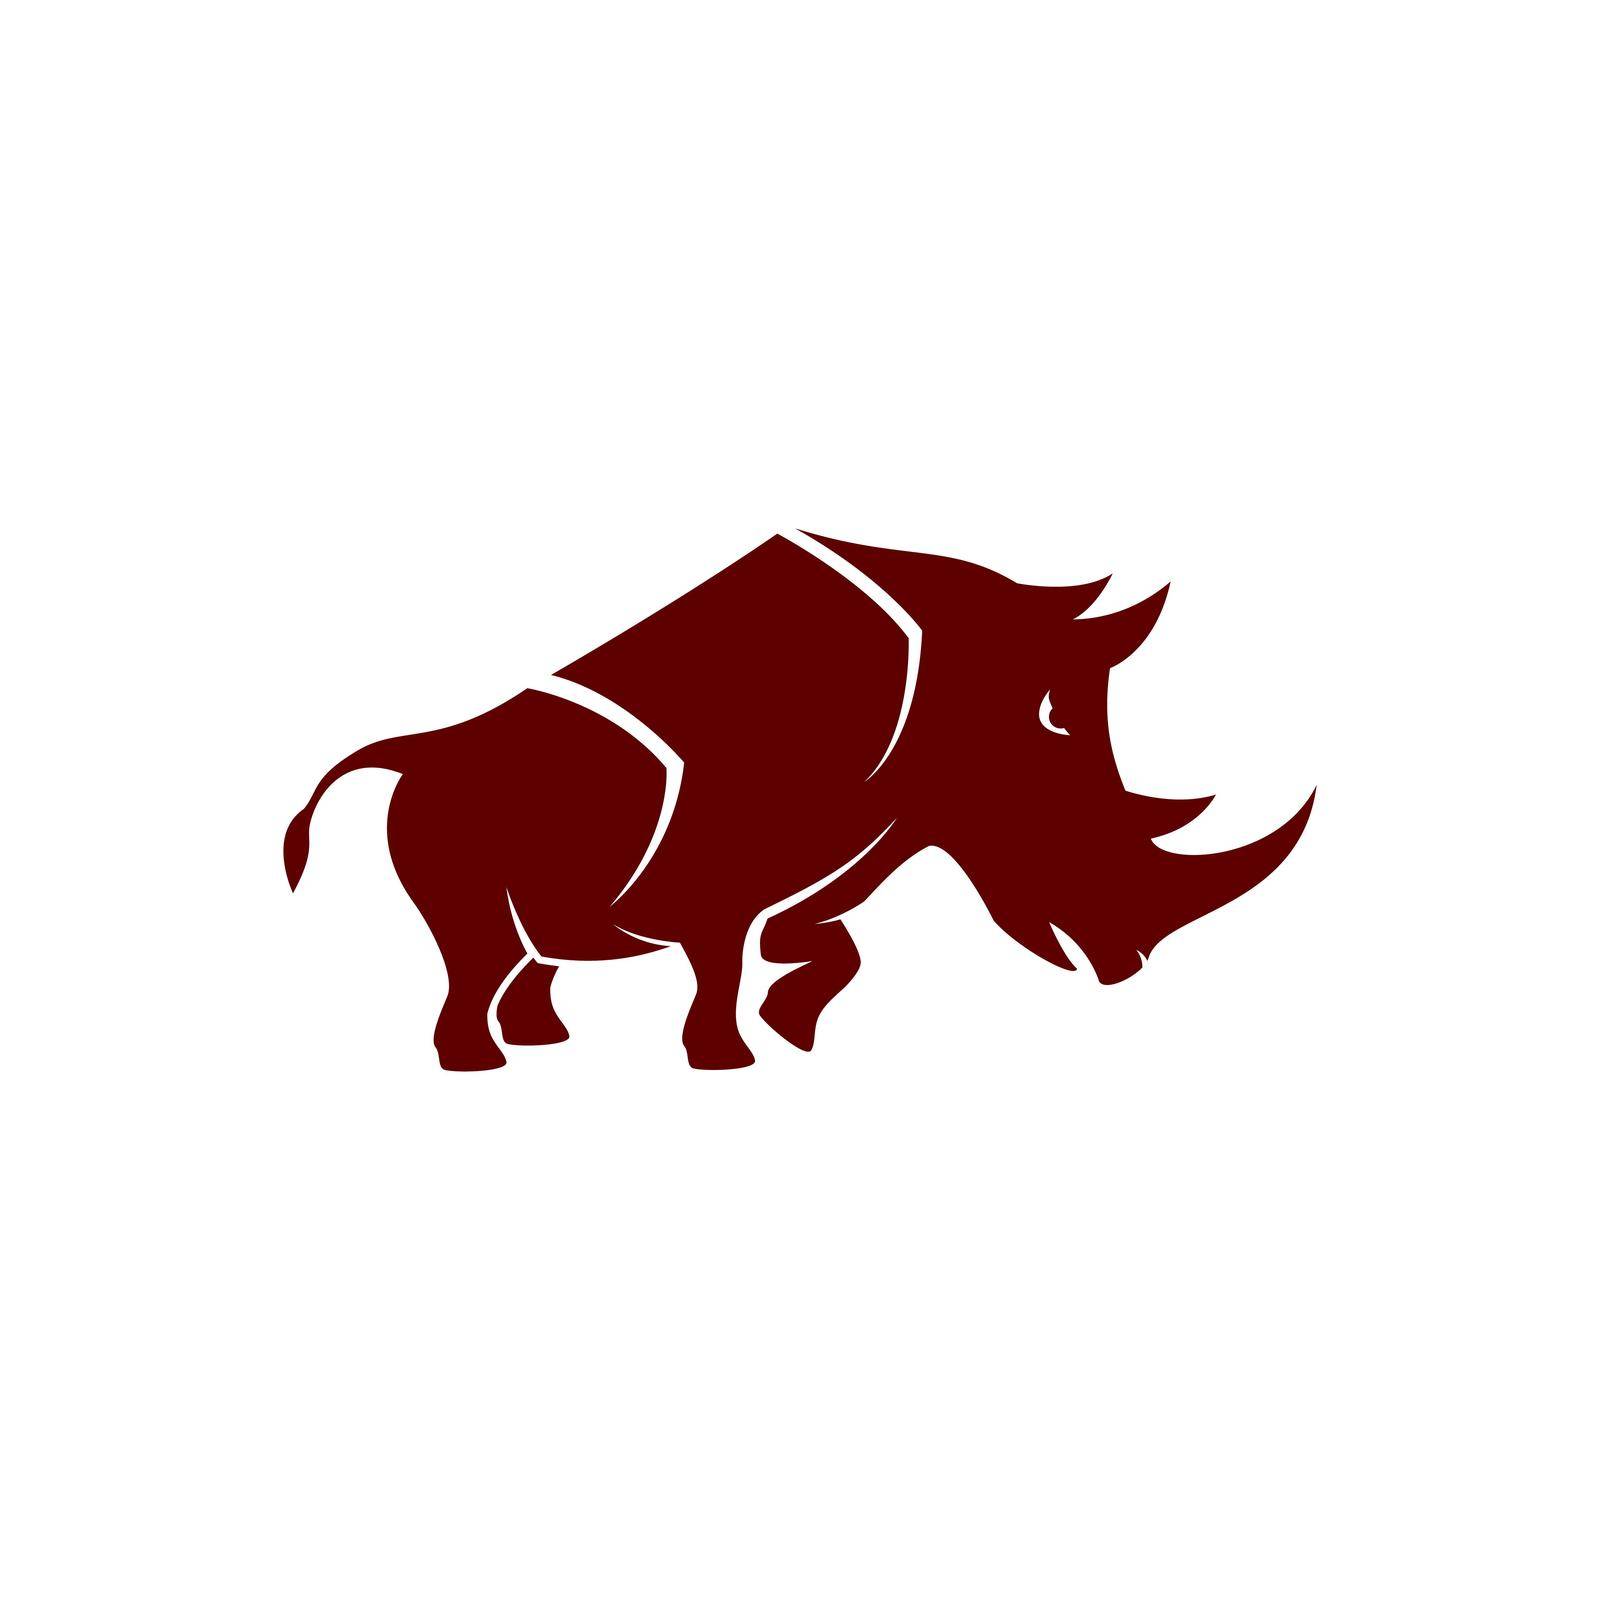 Rhino illustration logo silhouette vector design